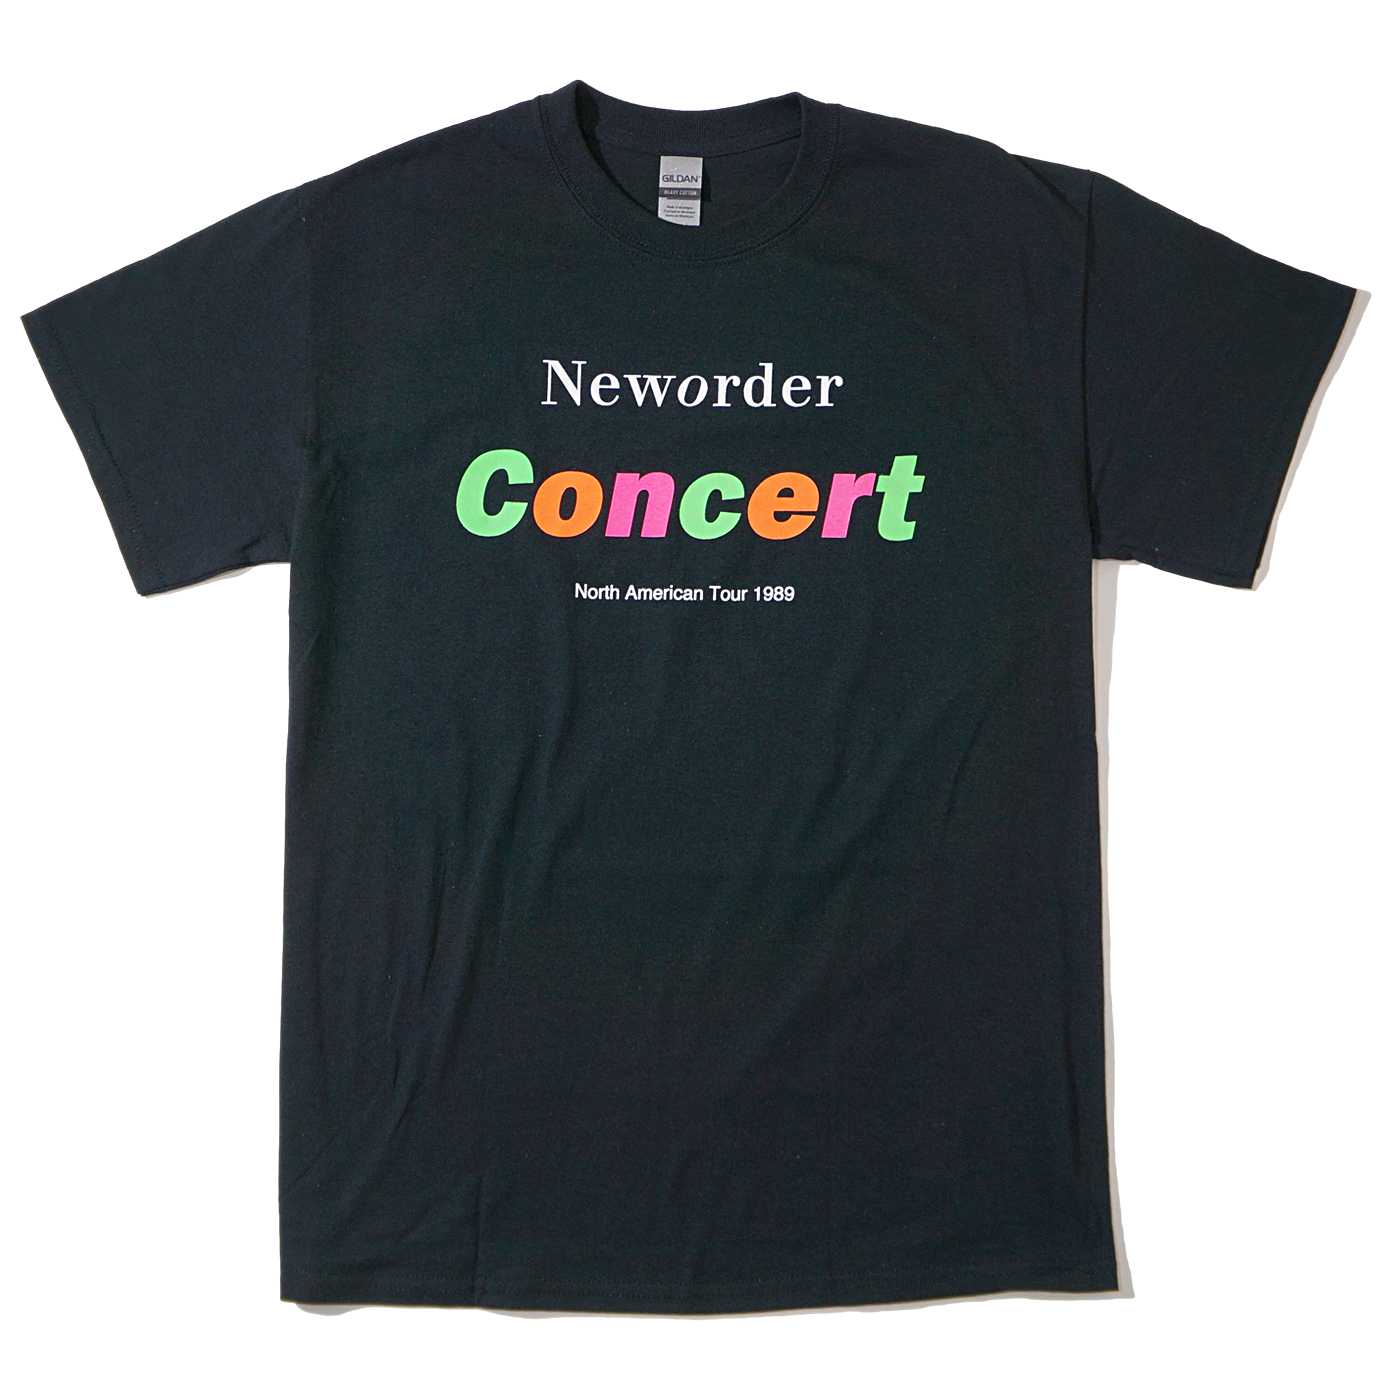 NEW ORDER Tシャツ Concert-Black